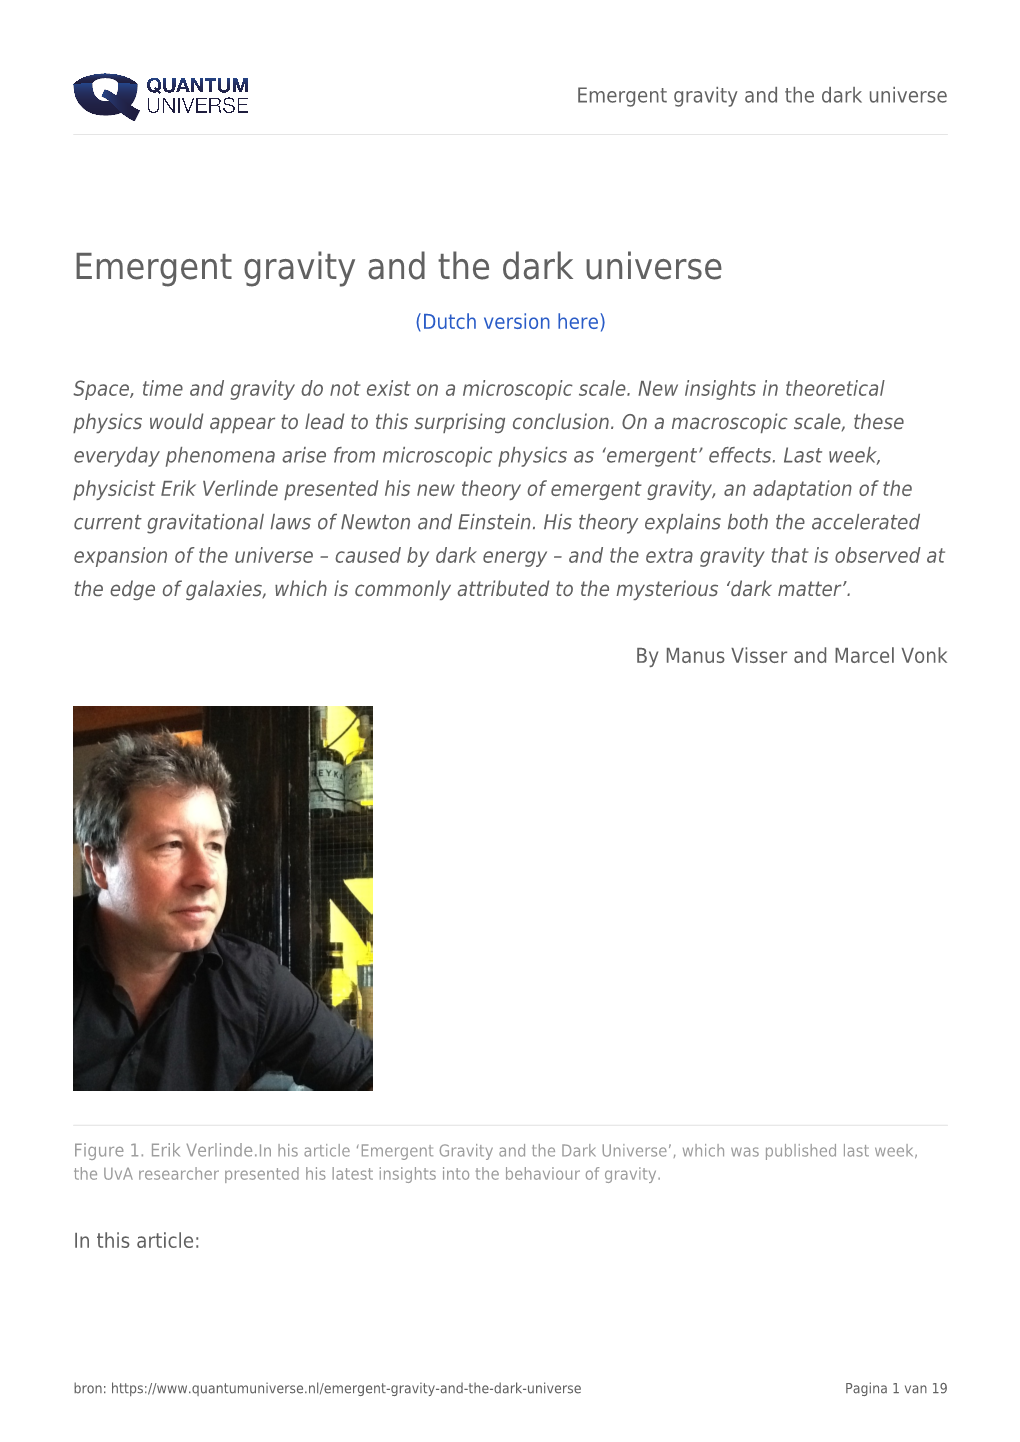 Emergent Gravity and the Dark Universe